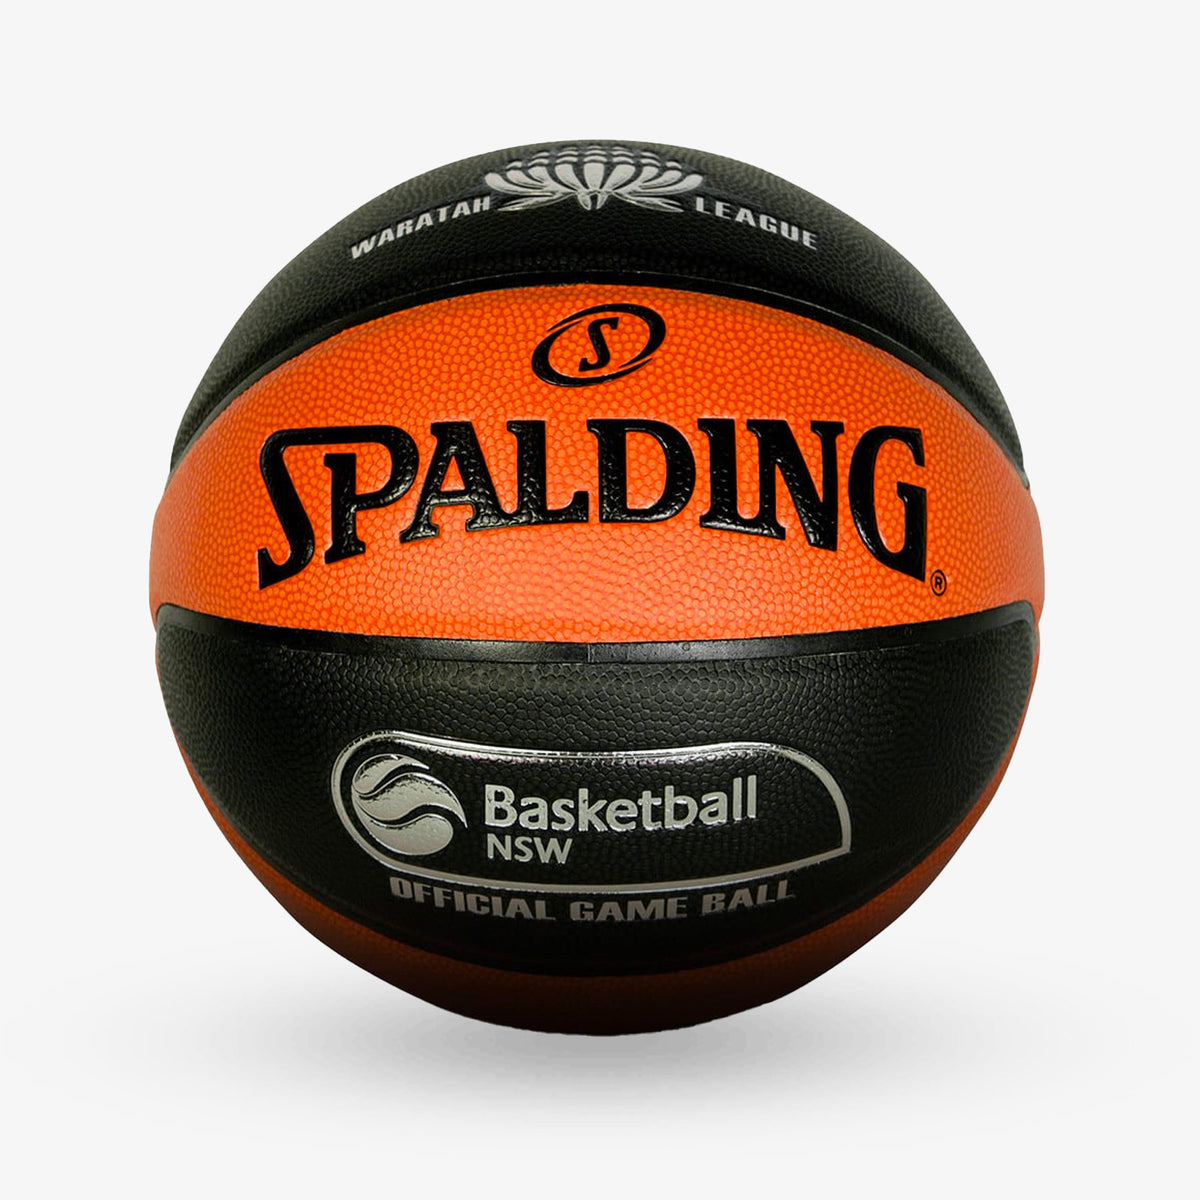 Spalding TF-1000 Legacy Indoor Basketball - Basketball NSW - Size 7